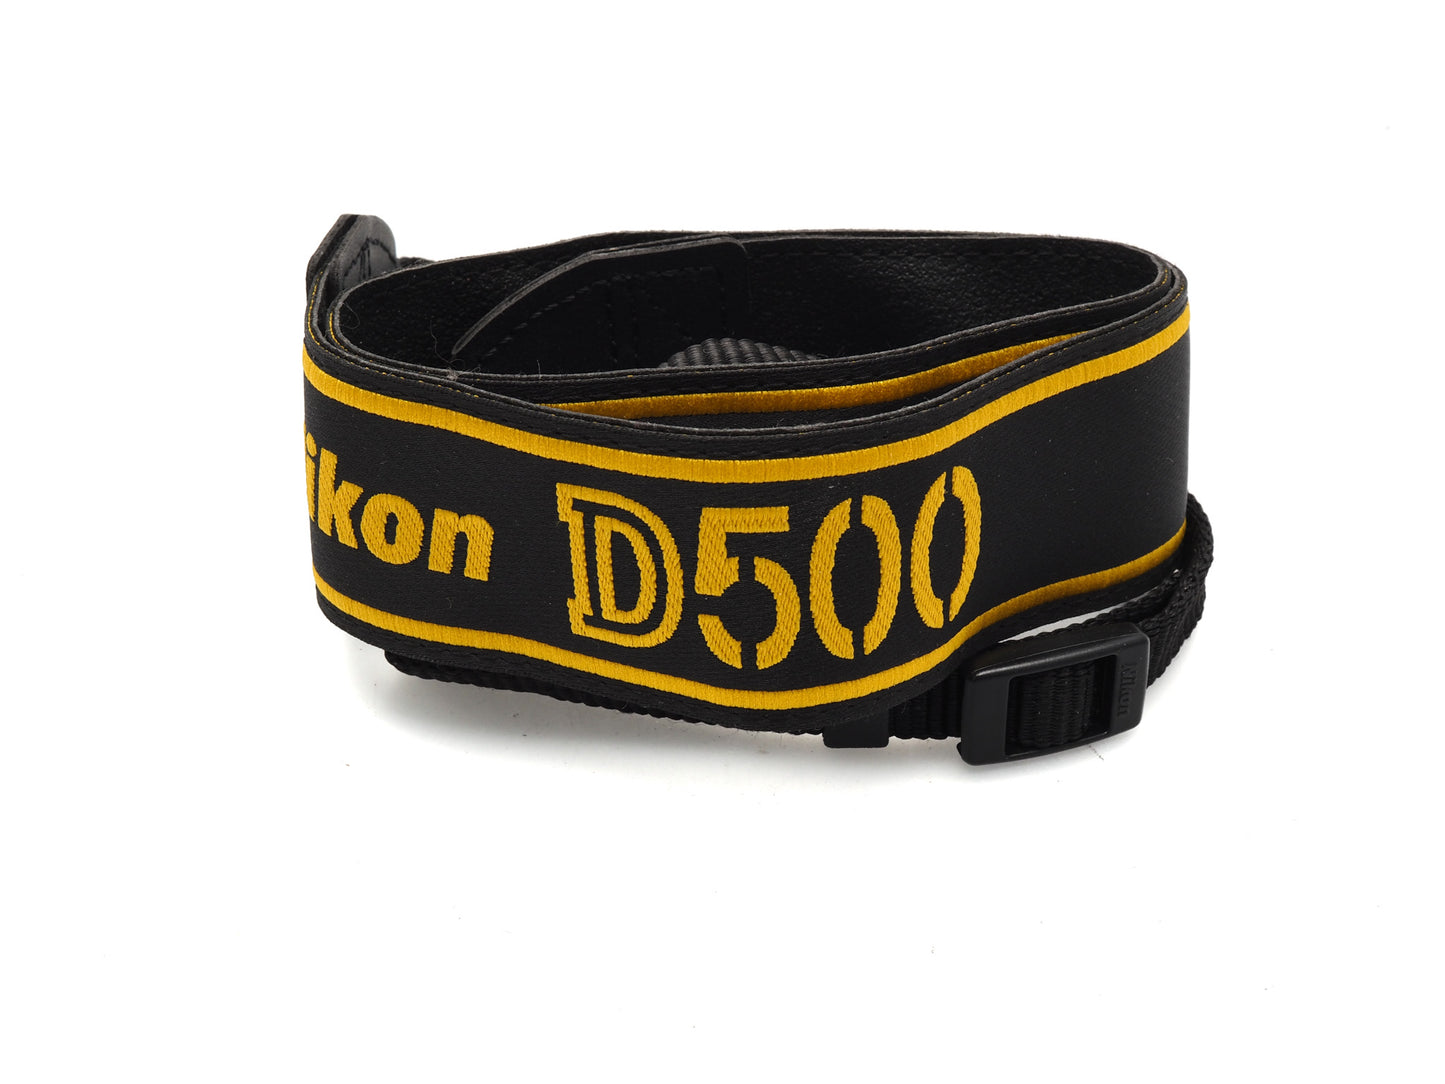 Nikon D500 - Accessory